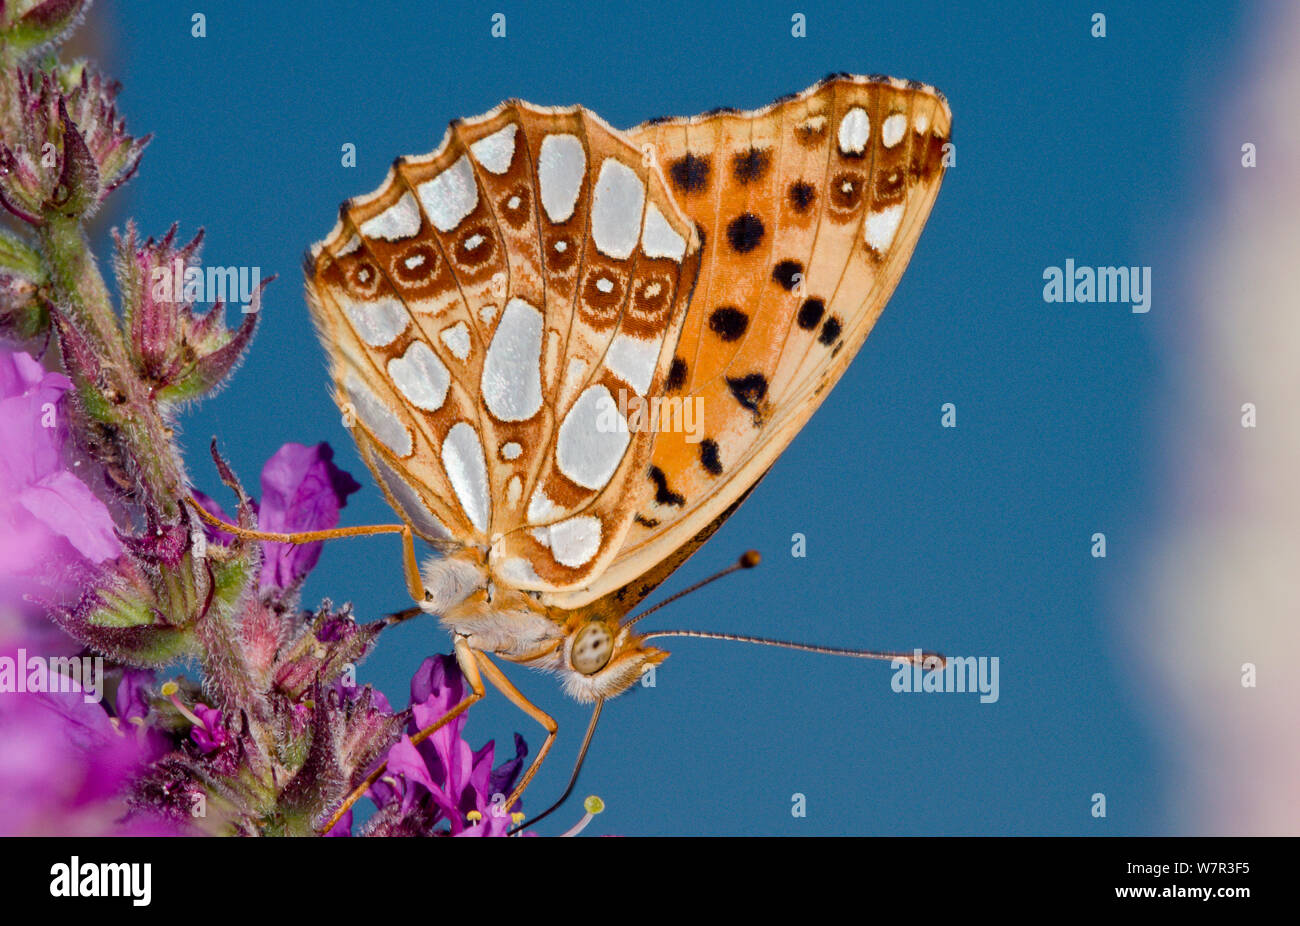 Queen of Spain fritillary butterfly (Issoria lathonia) feeding, Podere Montecucco, Orvieto, Umbria, Italy, July Stock Photo